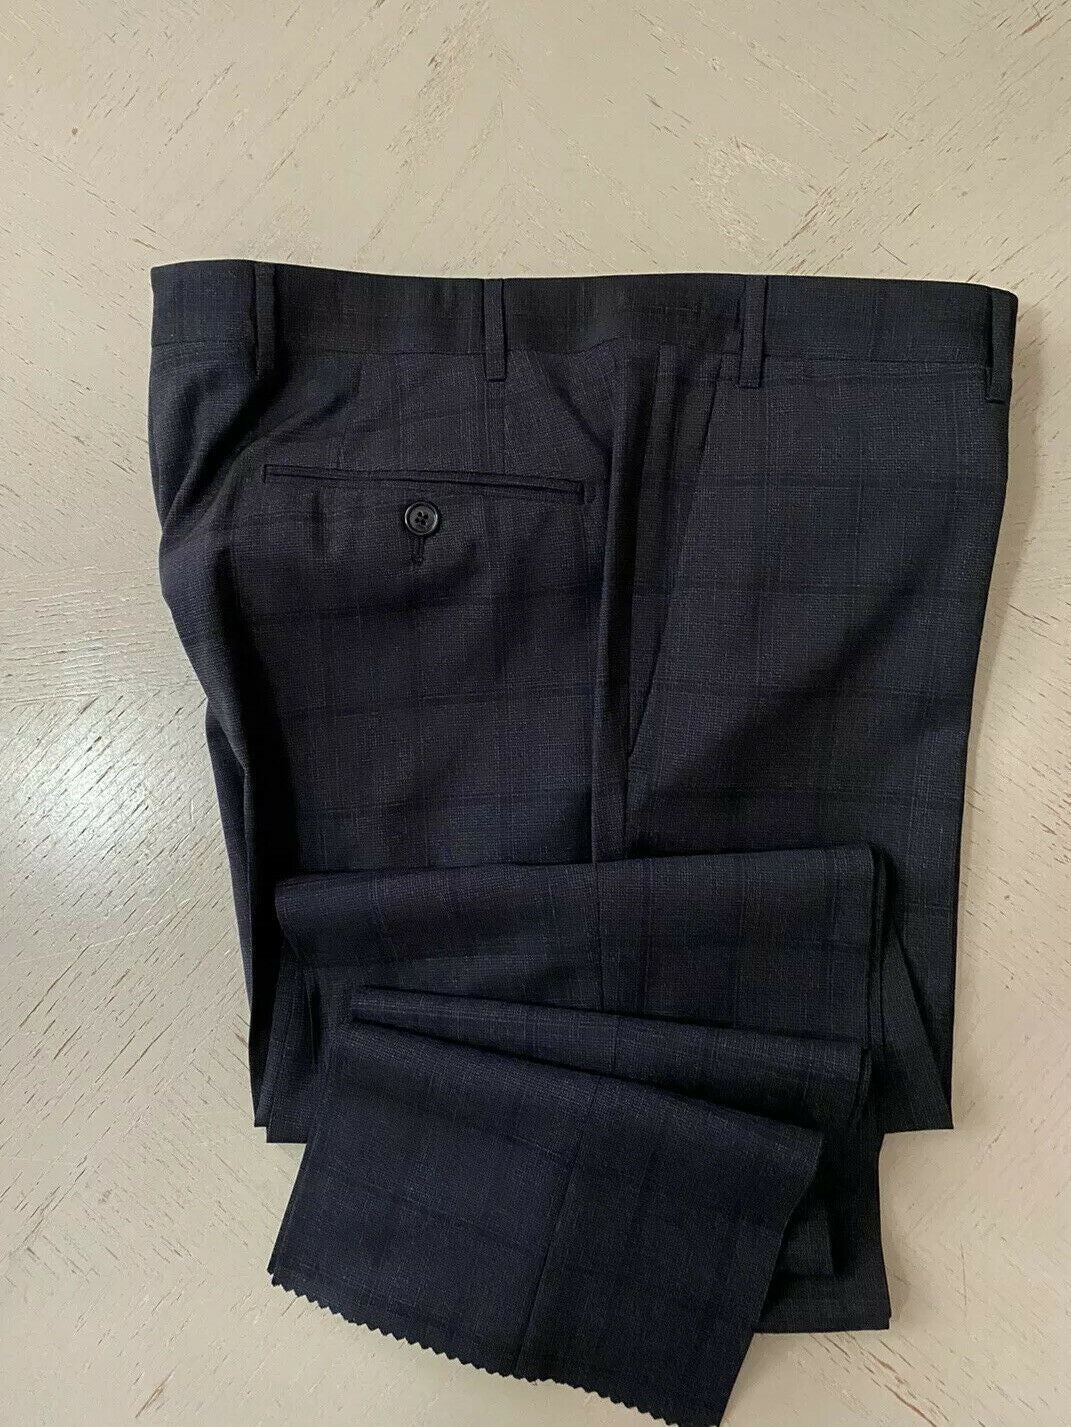 New $1795 Corneliani Mens Wool Suit Black 42R US ( 52R Eu ) Italy